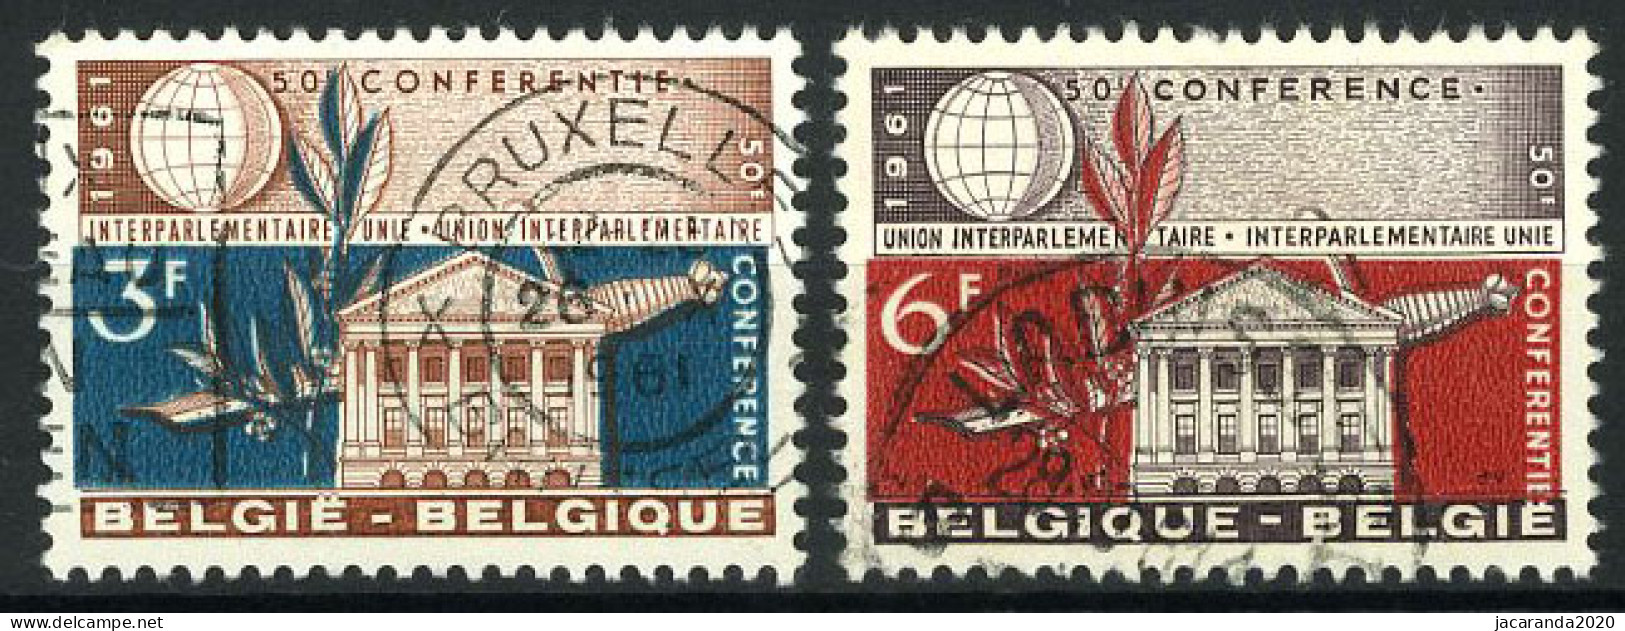 België 1191/92 - Interparlementaire Unie - Gestempeld - Oblitéré - Used - Gebraucht